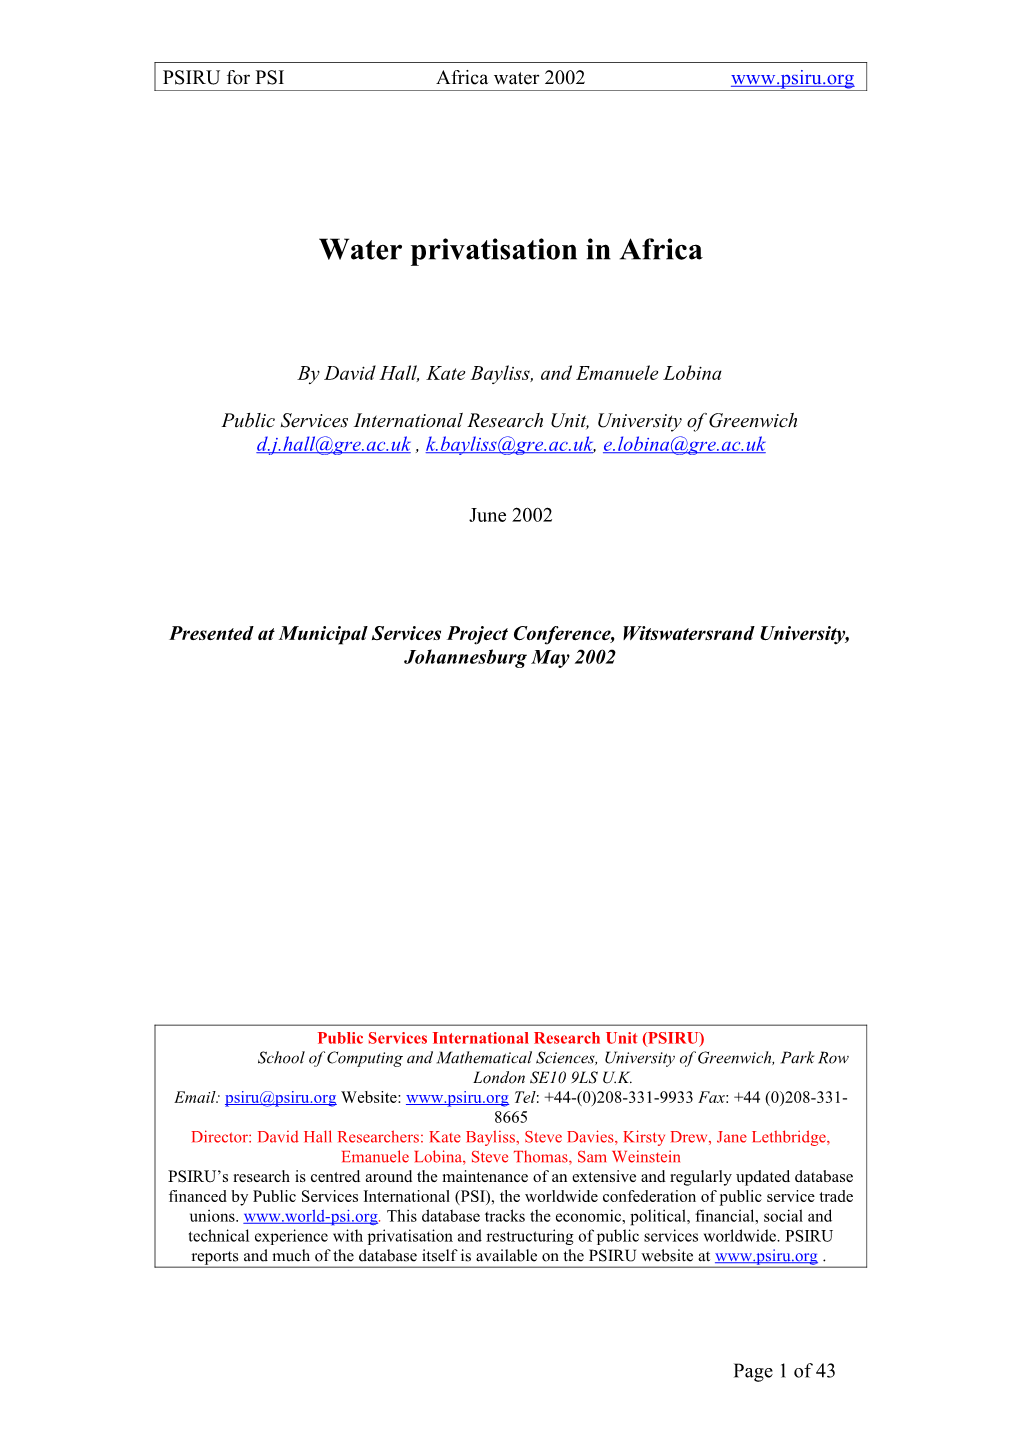 PSIRU for Psiafrica Water 2002